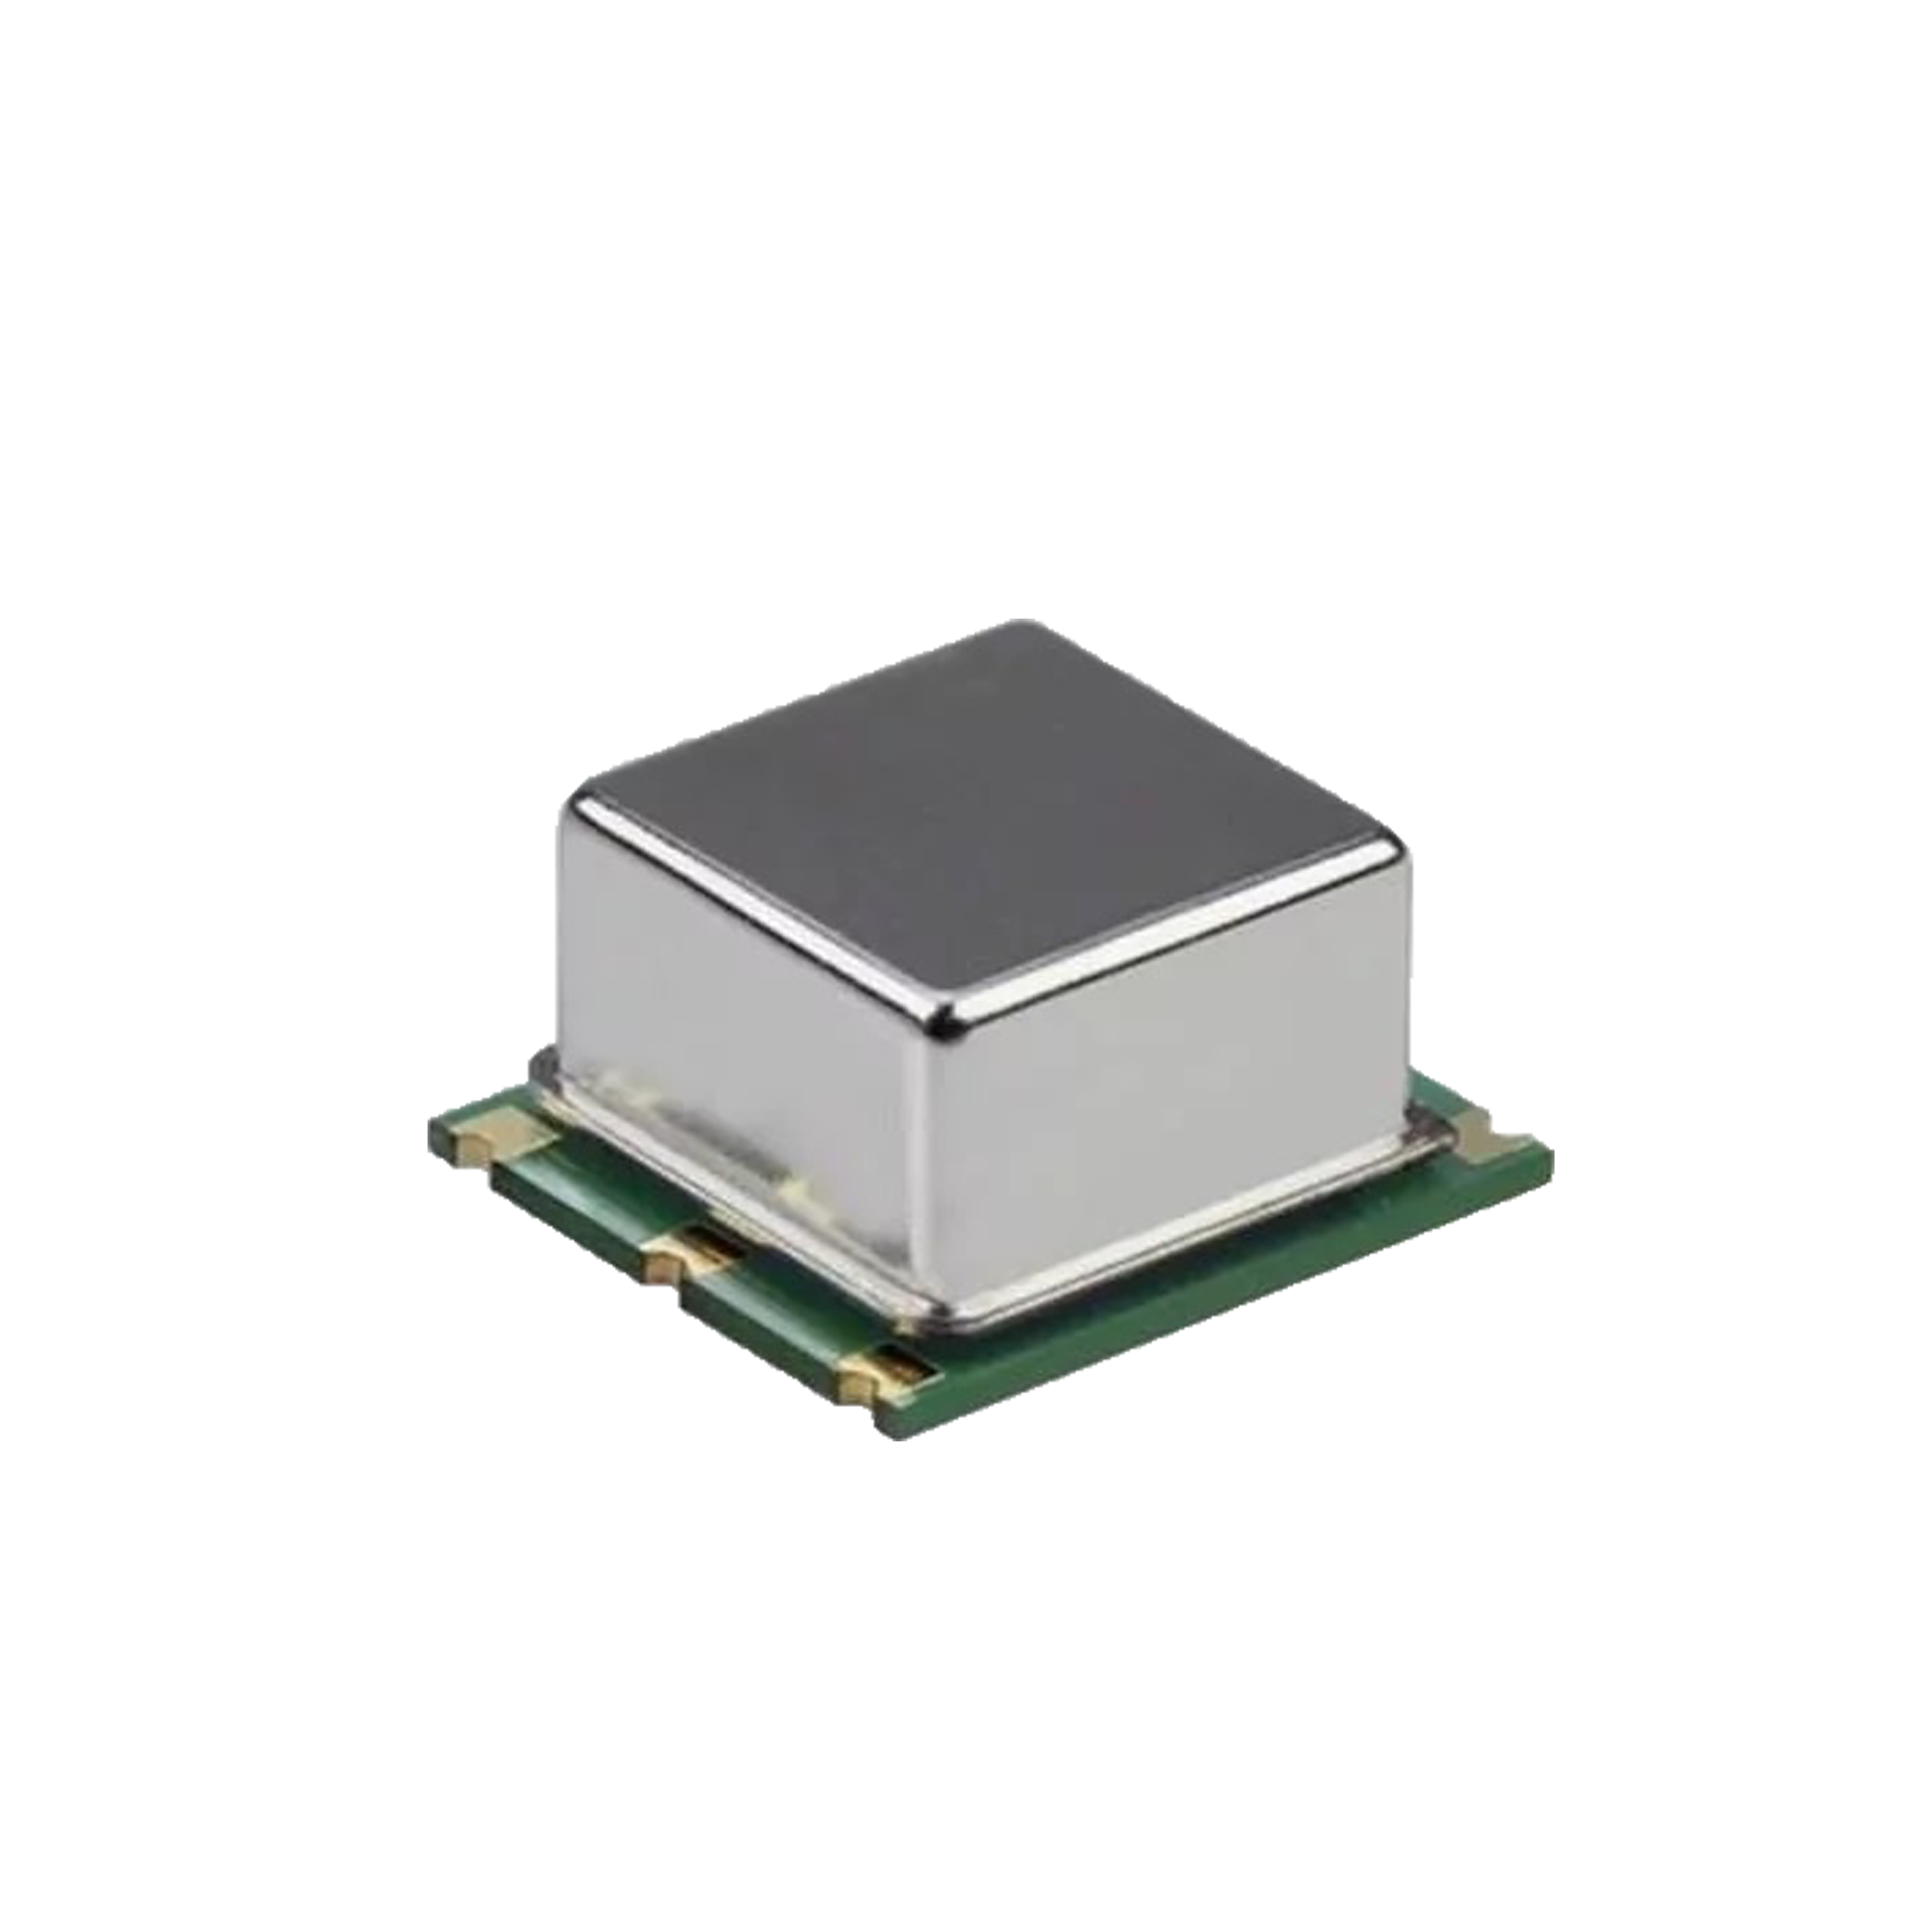 Product image for OCXO Crystal Oscillators